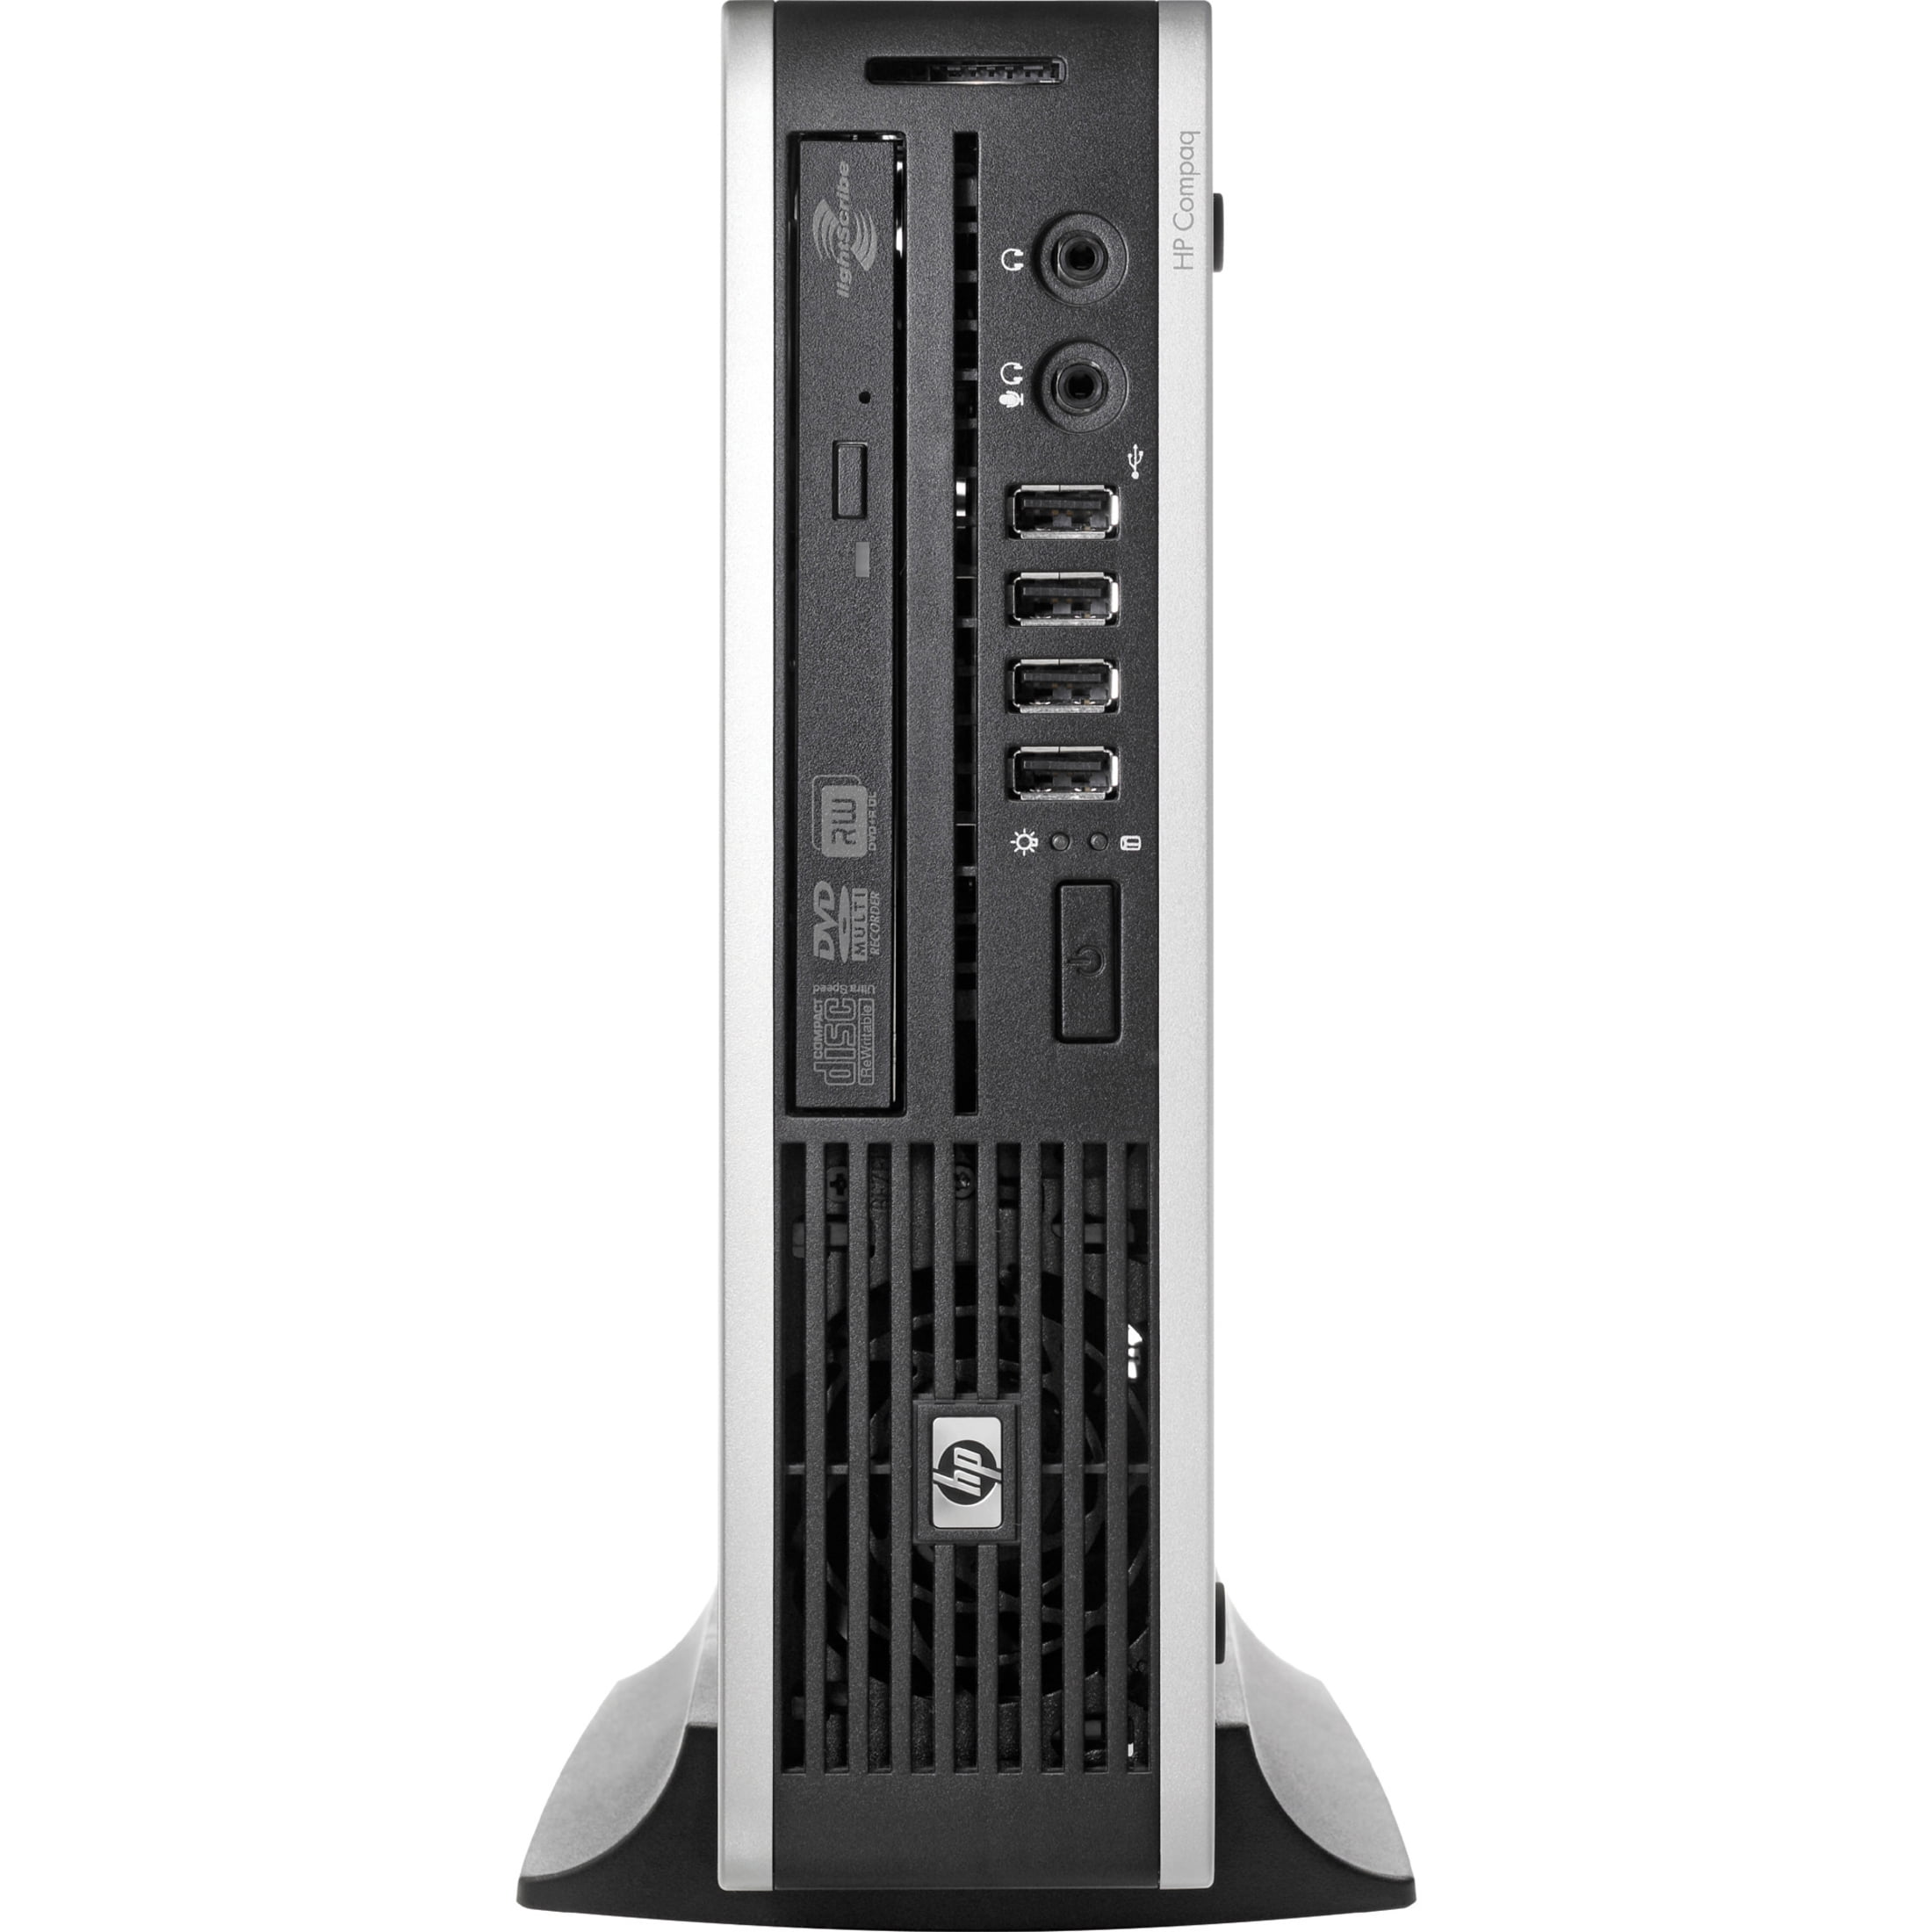 HP Business Desktop Computer, AMD Phenom II X4 910e, 4GB RAM, 250GB HD, DVD  Writer, Windows 7 Professional 